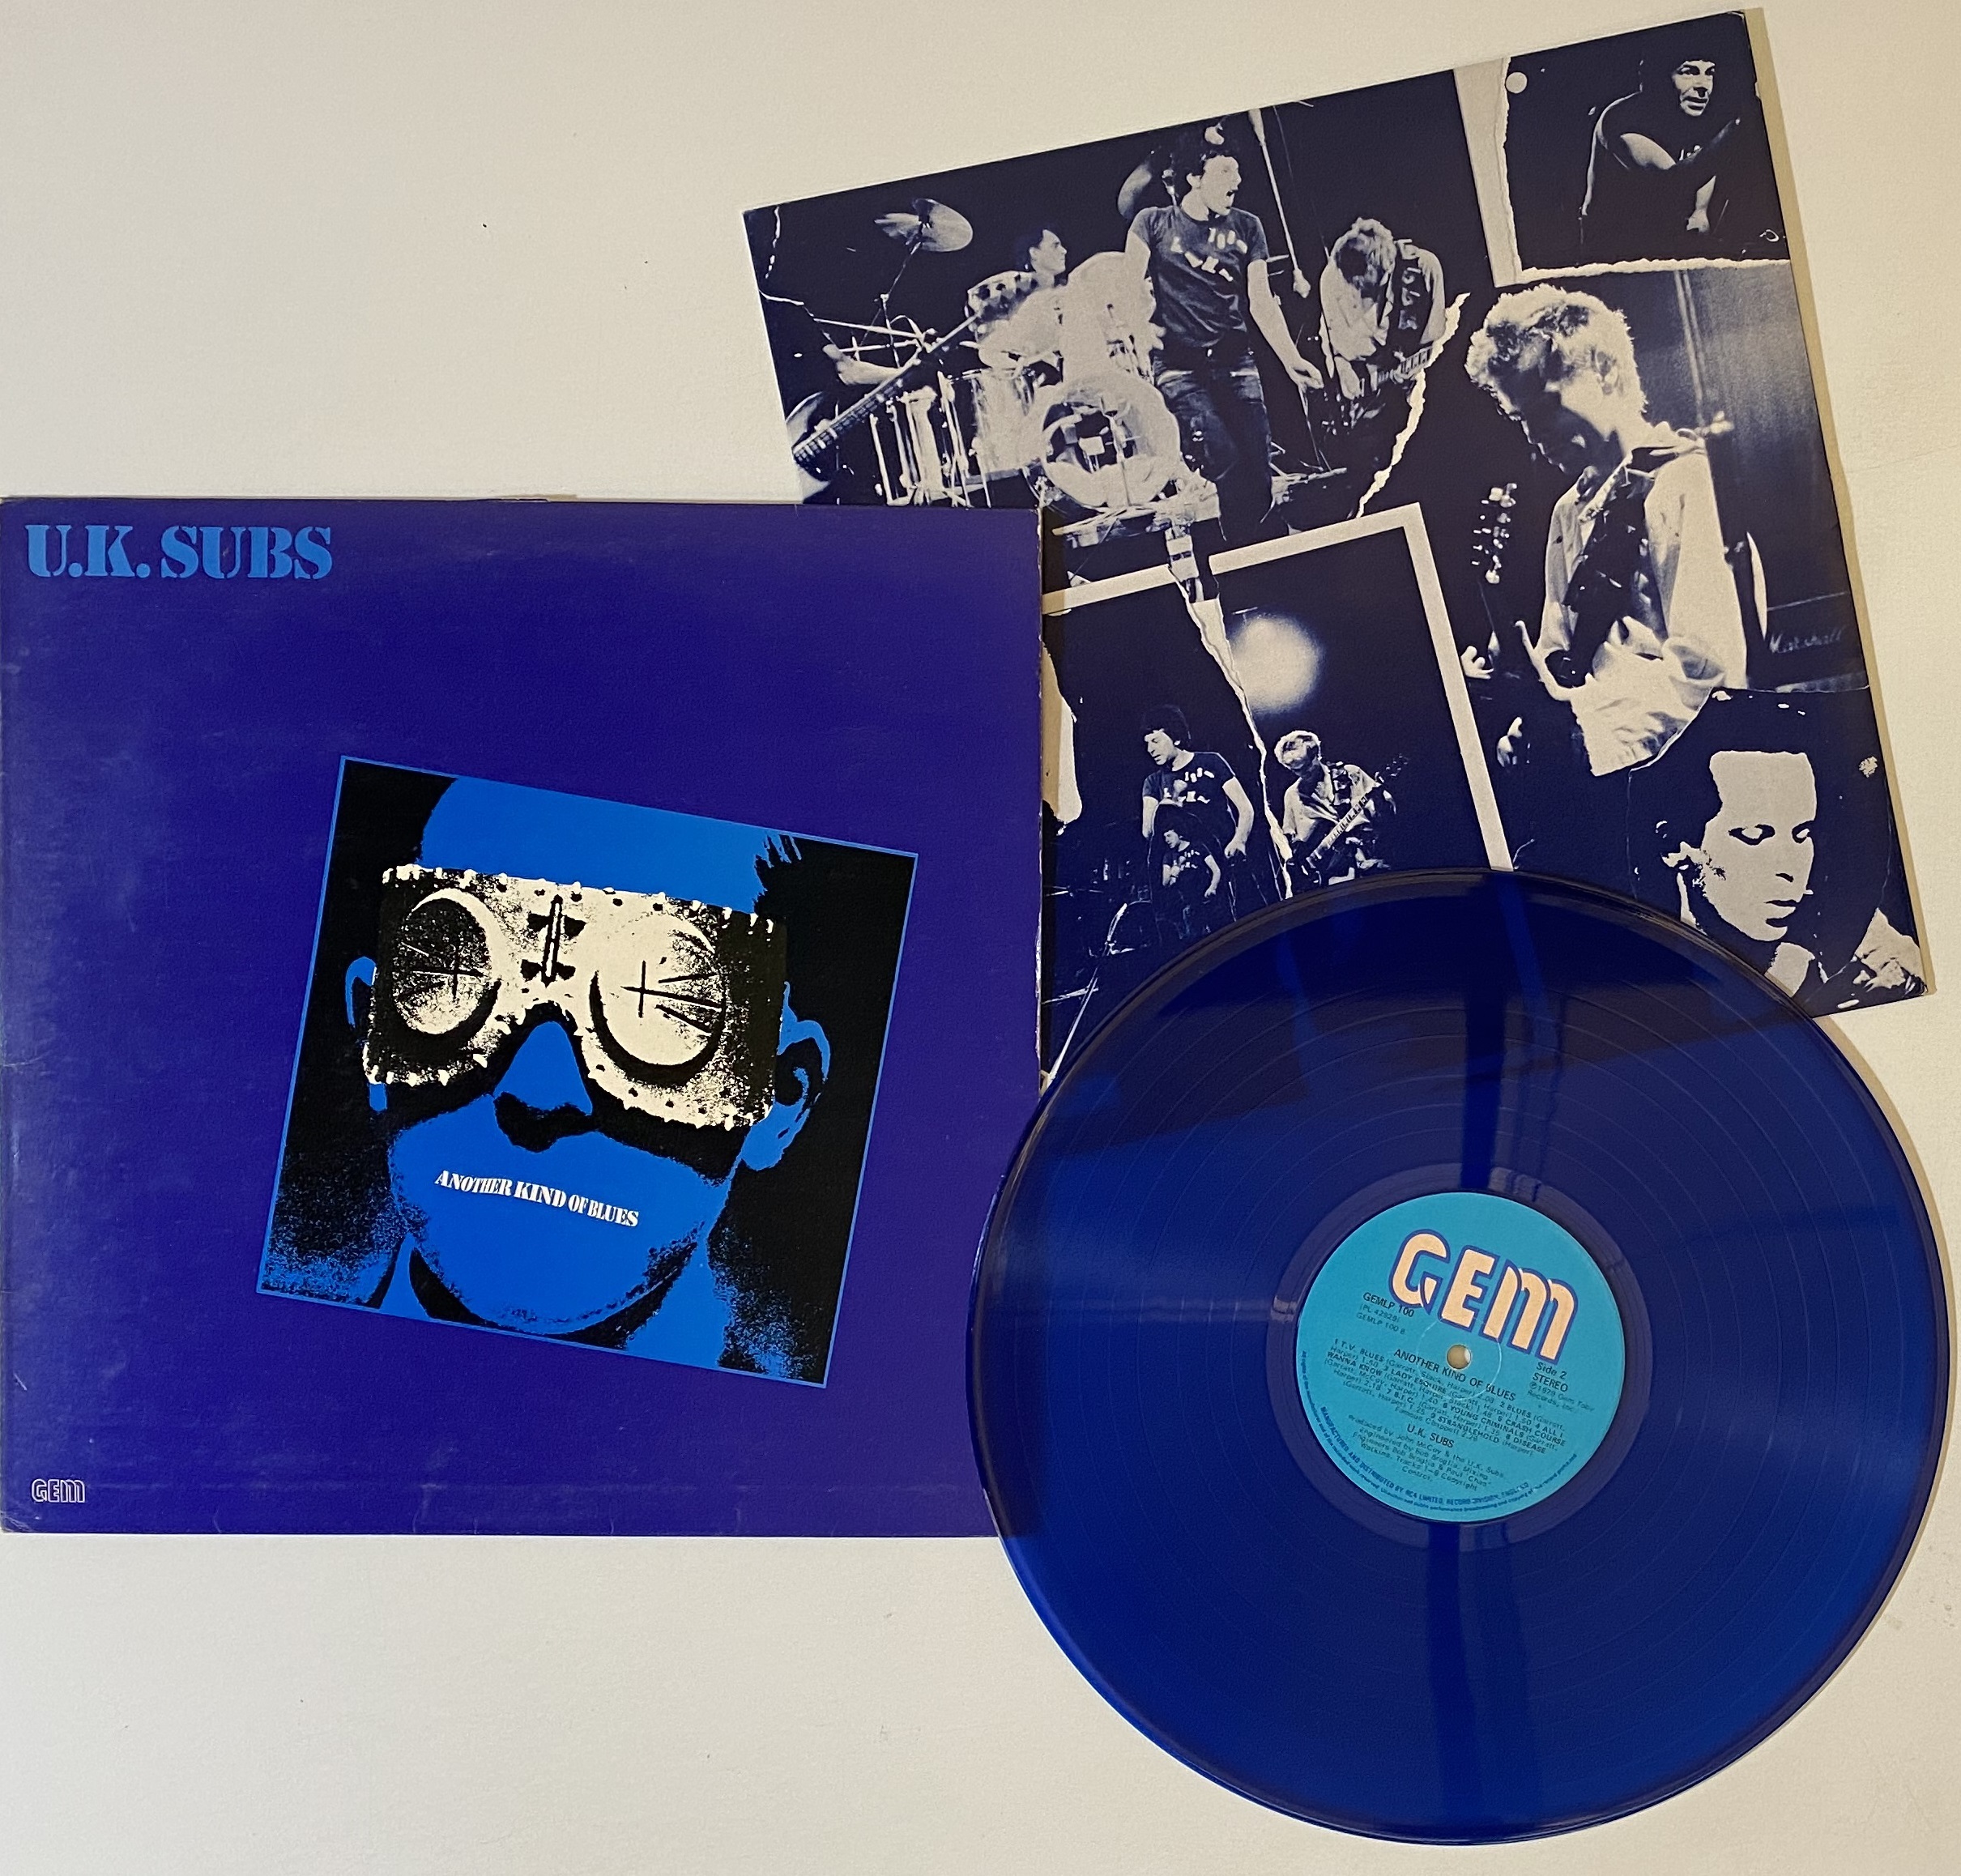 Television Marquee Moon - Blue Vinyl UK 2-LP vinyl set